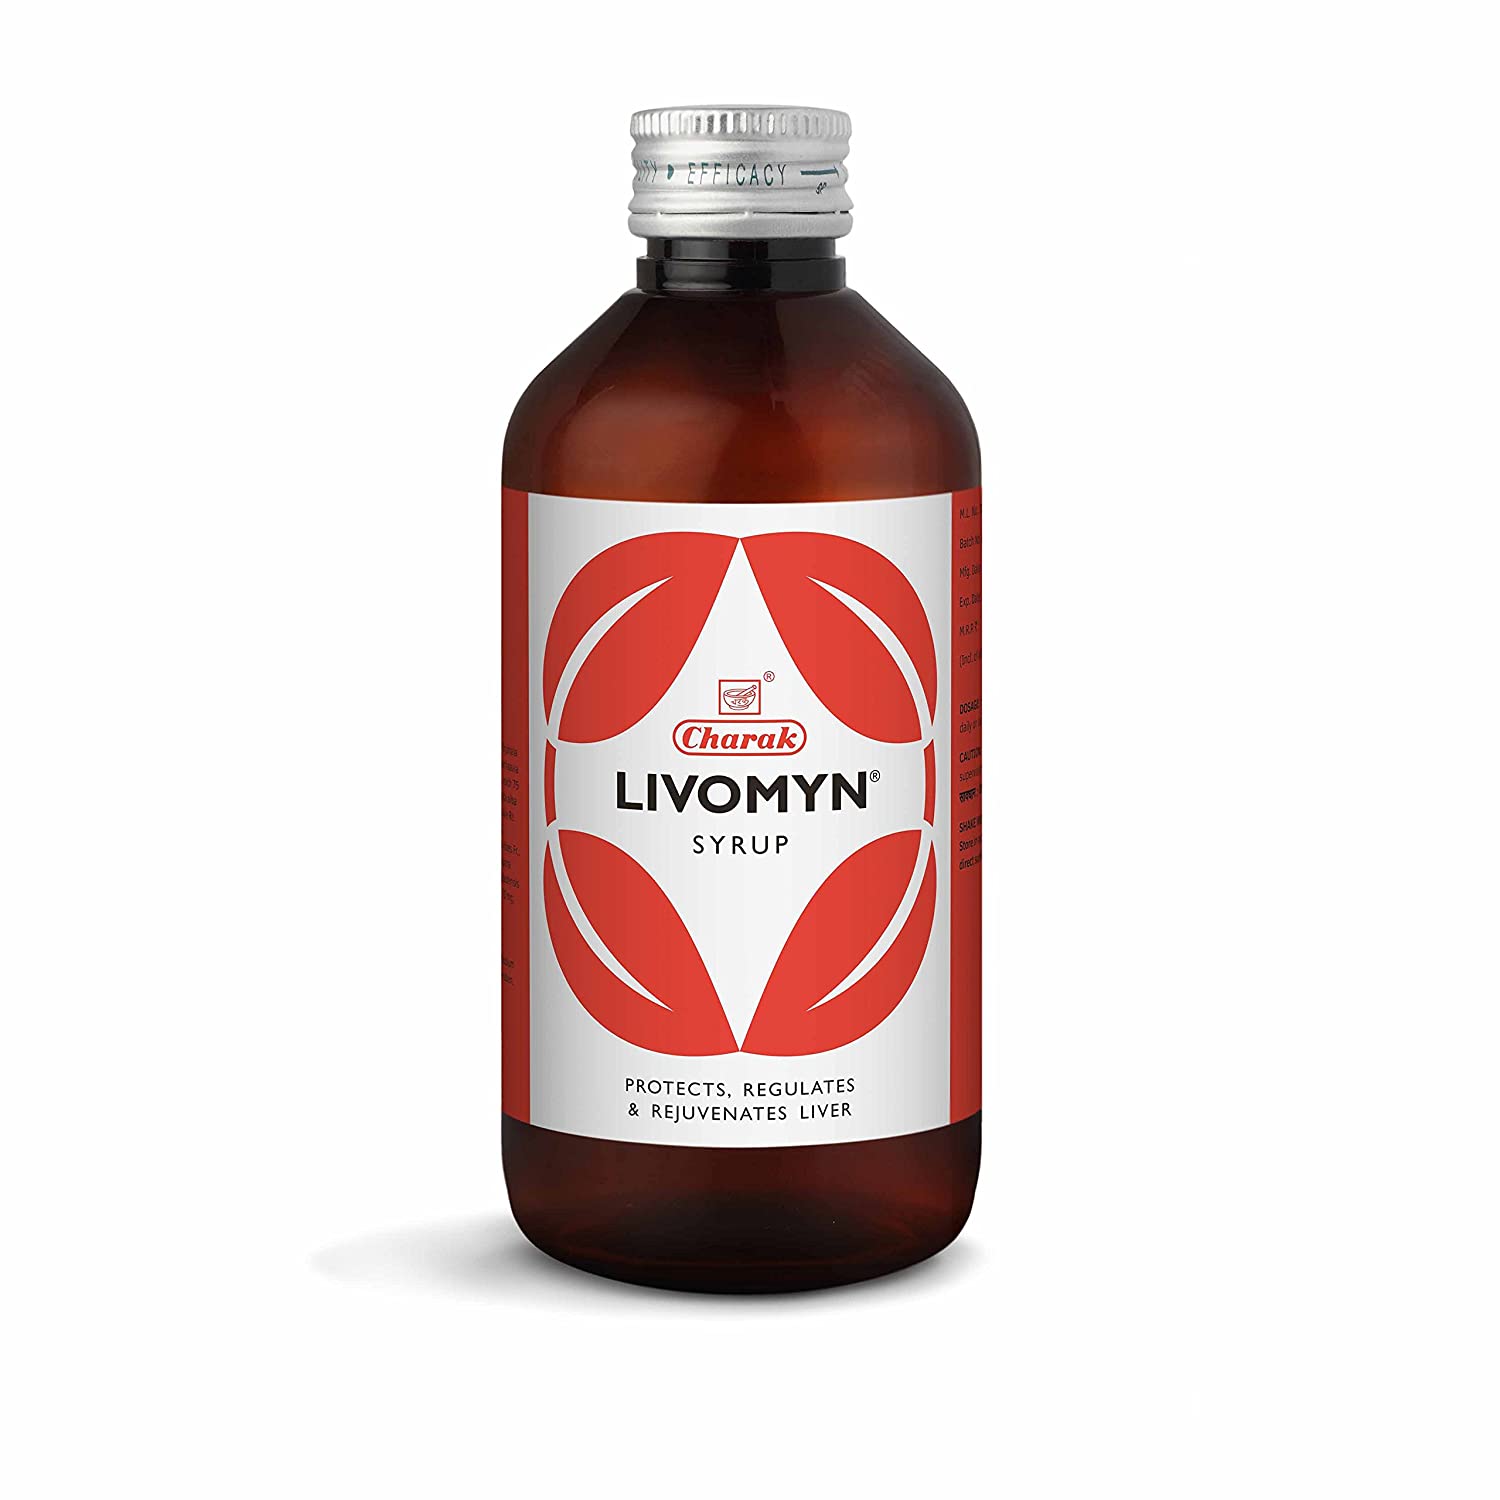 Charak livomyn syrup 200ml -  Charak - Medizzo.com